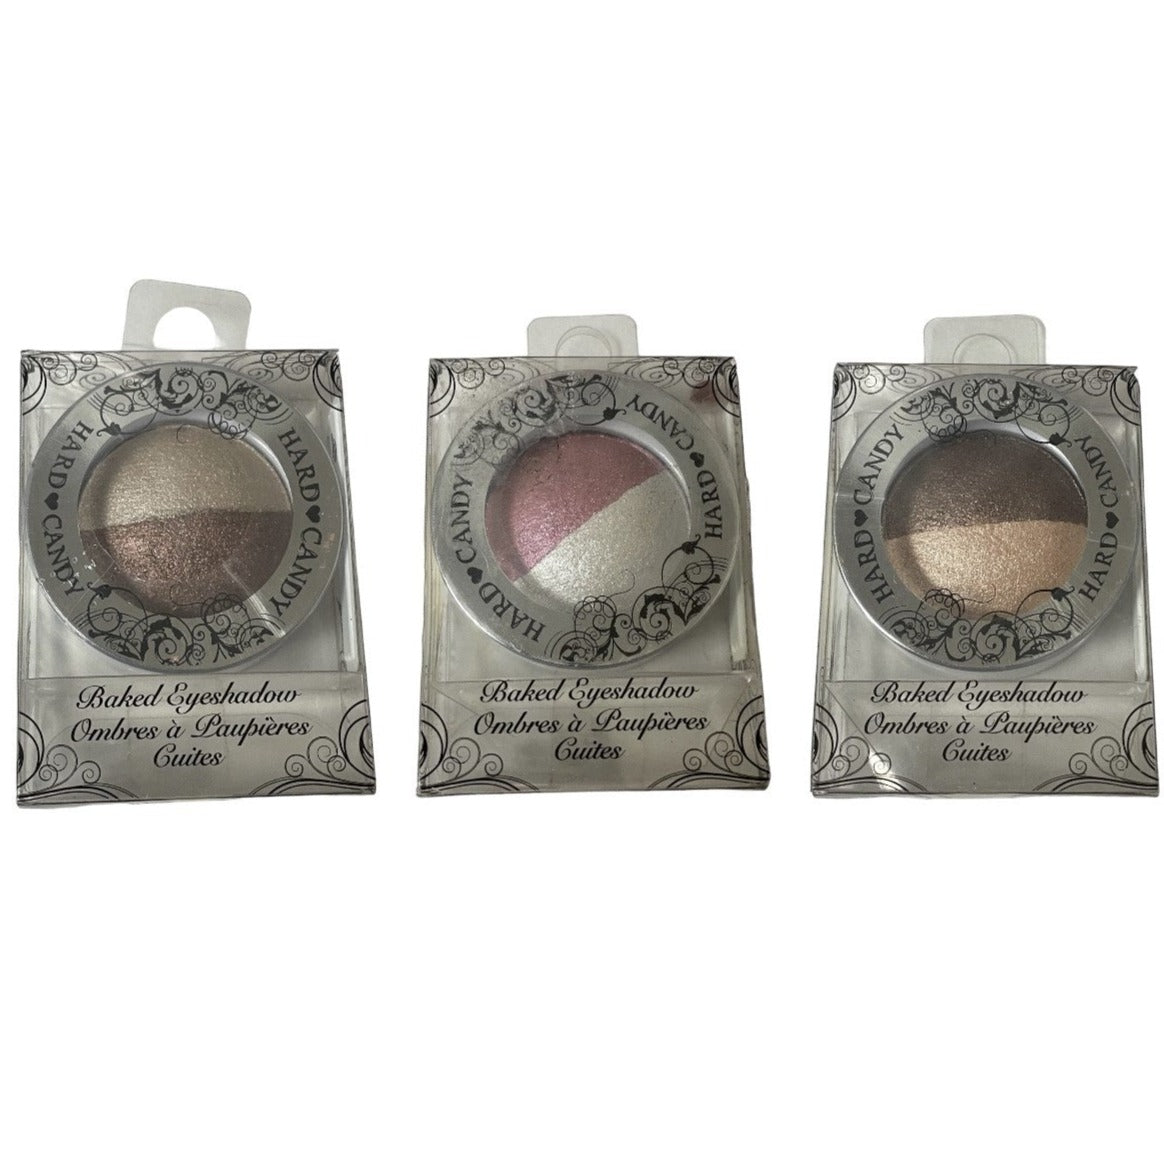 Shelf Pull Makeup - Hard Candy Baked Eyeshadow, Assortment Of 3 Shades - 24 Units